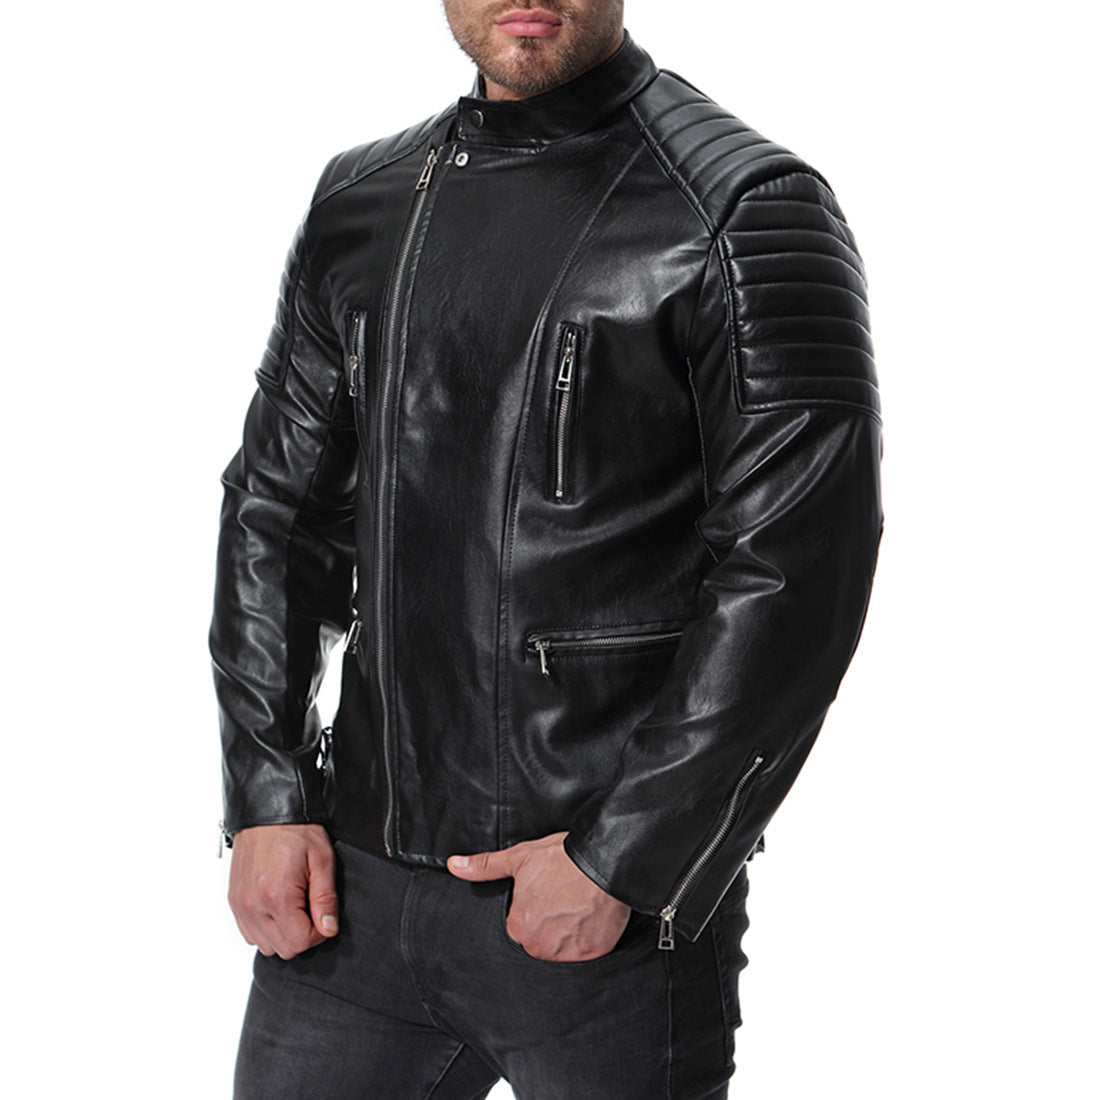 Lapel Leather Jacket Fashion Biker Style